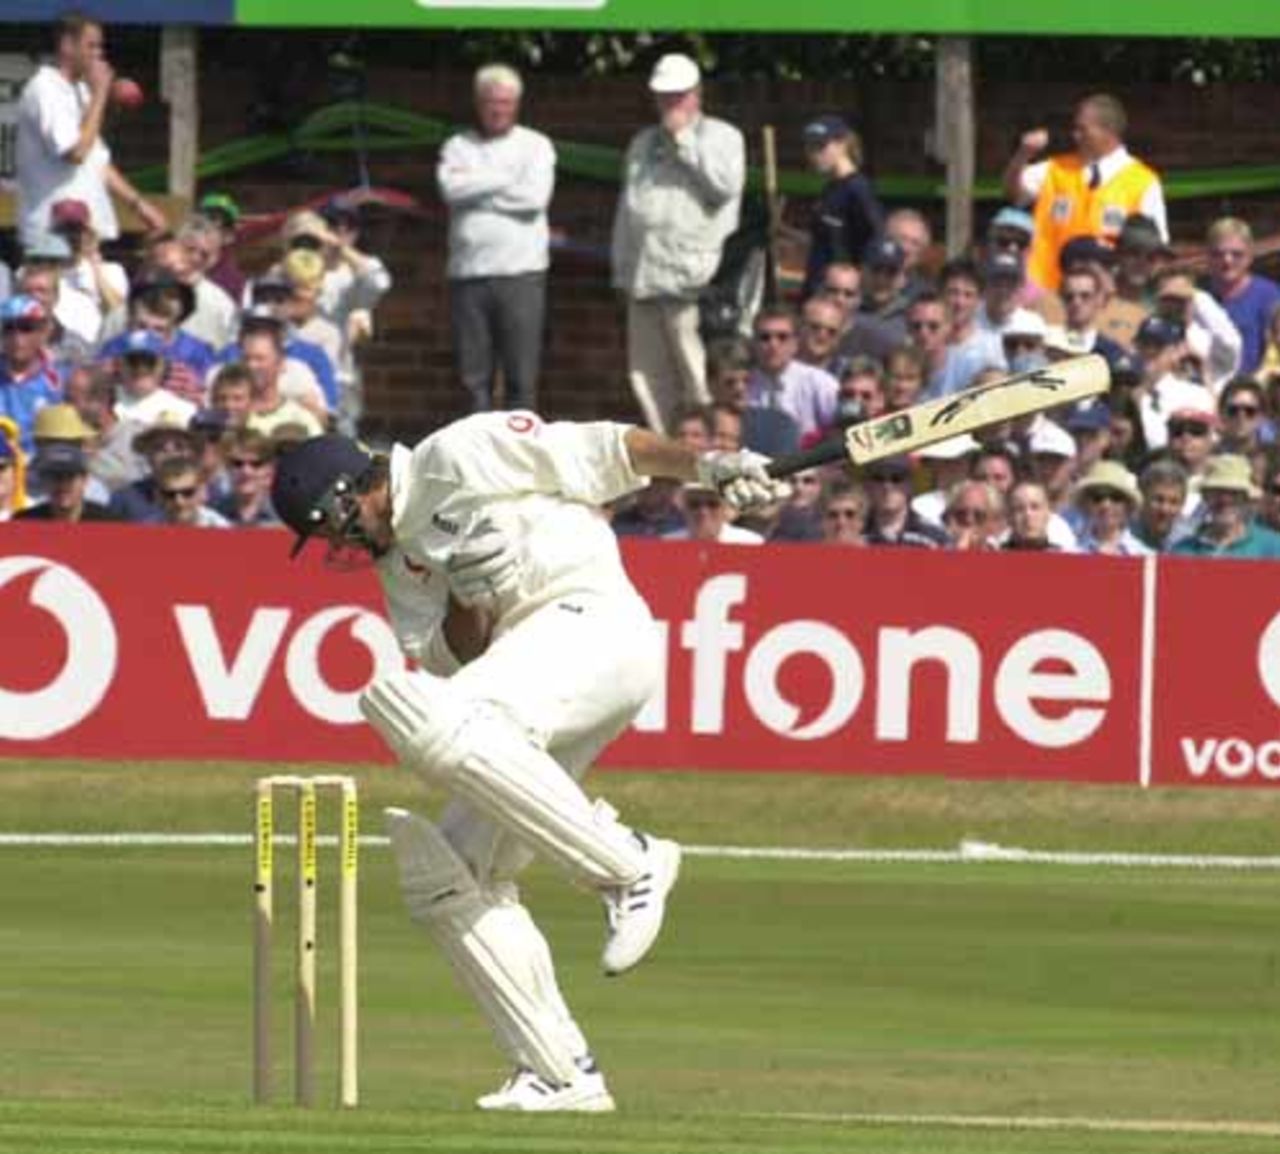 England v West Indies 4th test, Leeds 2000